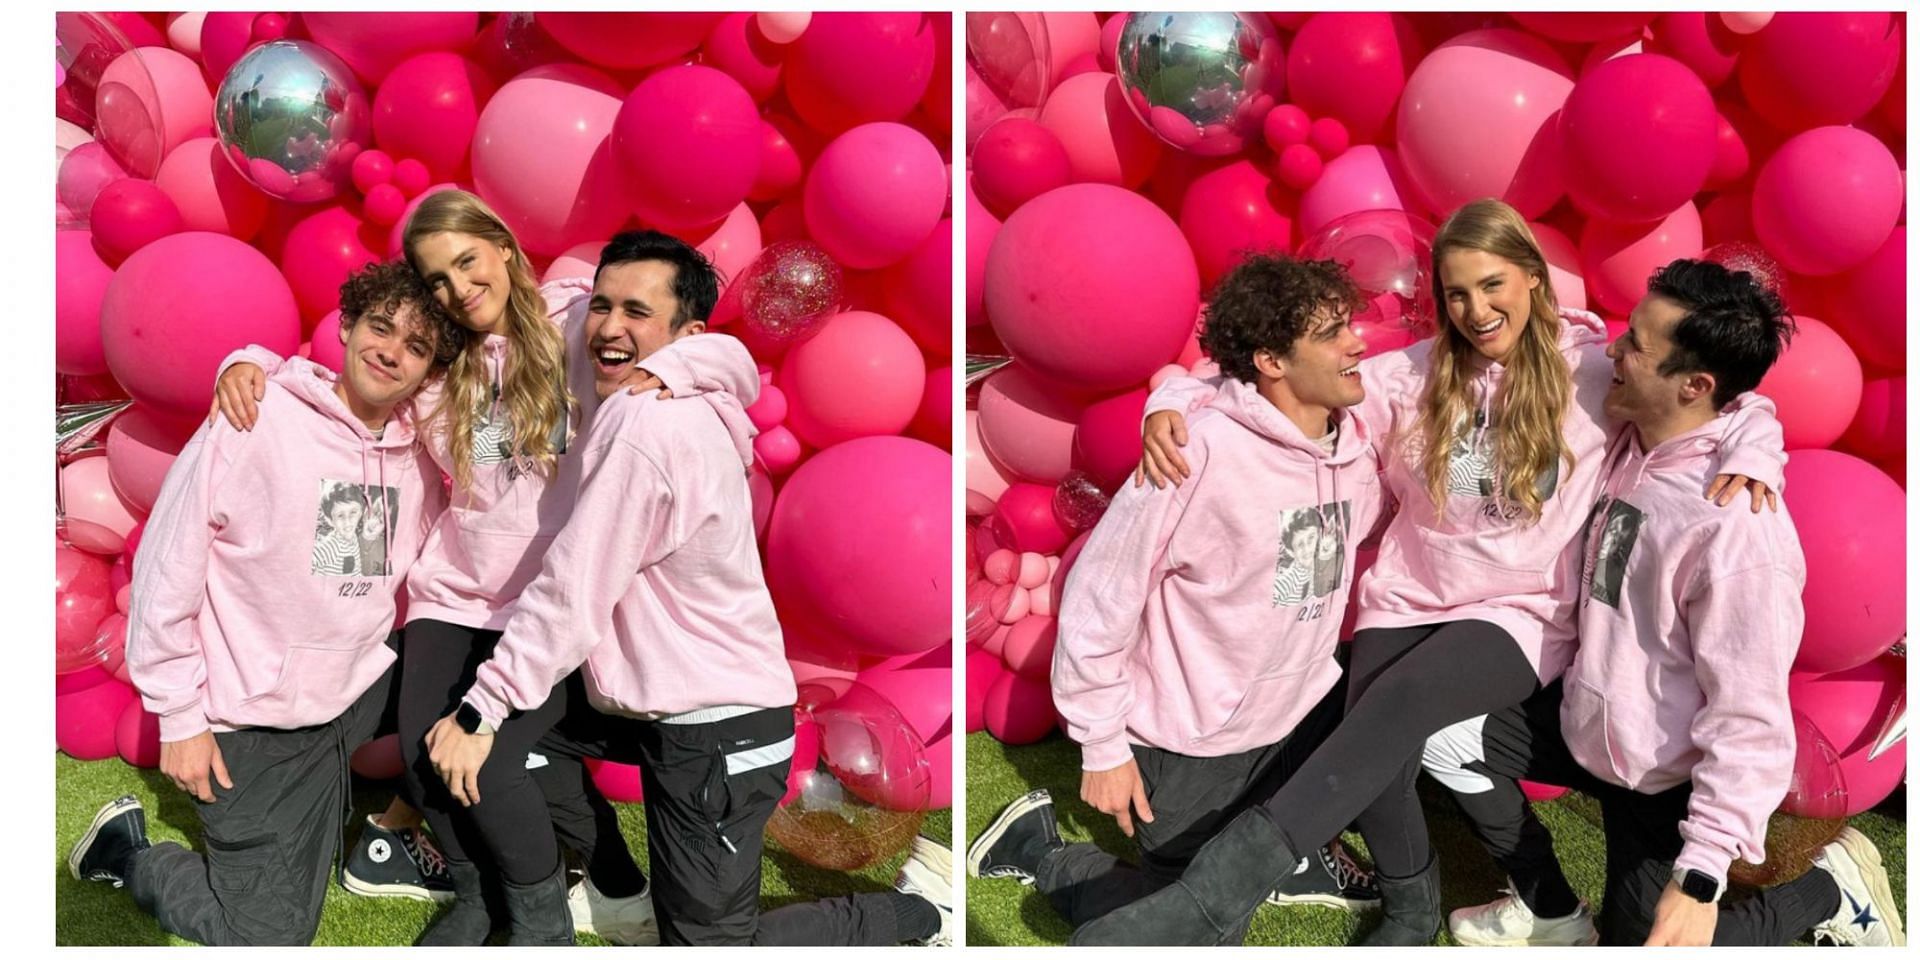 Chris Olsen, Meghan Trainer and Joshua Basset celebrated their birthdays together: Pictures left netizens ecstatic. (Image via Chris Olsen/ Instagram)